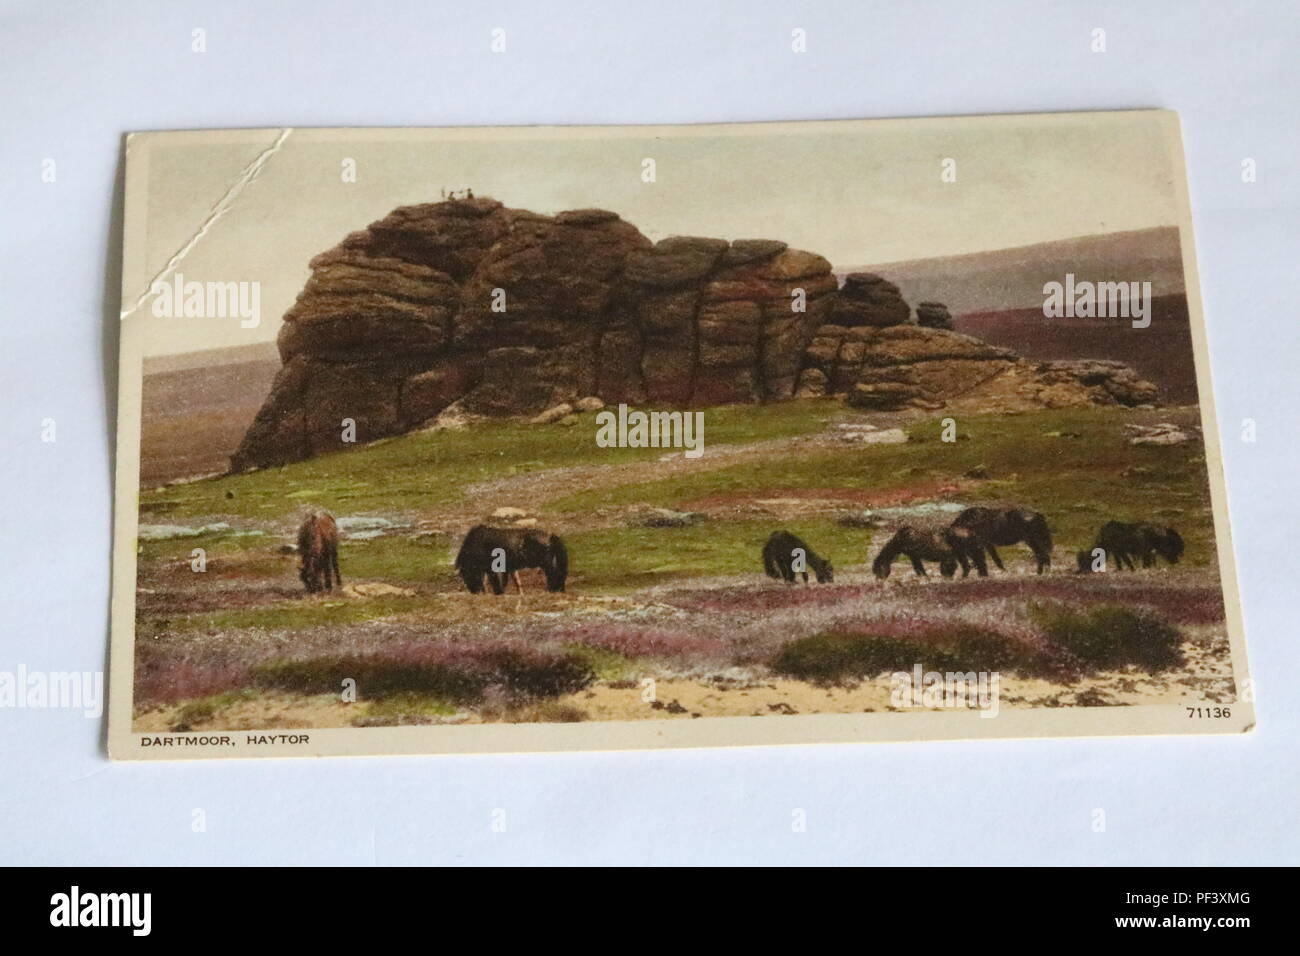 Early colour postcard showing Dartmoor, Haytor, Devon, UK - Horses grazing Stock Photo